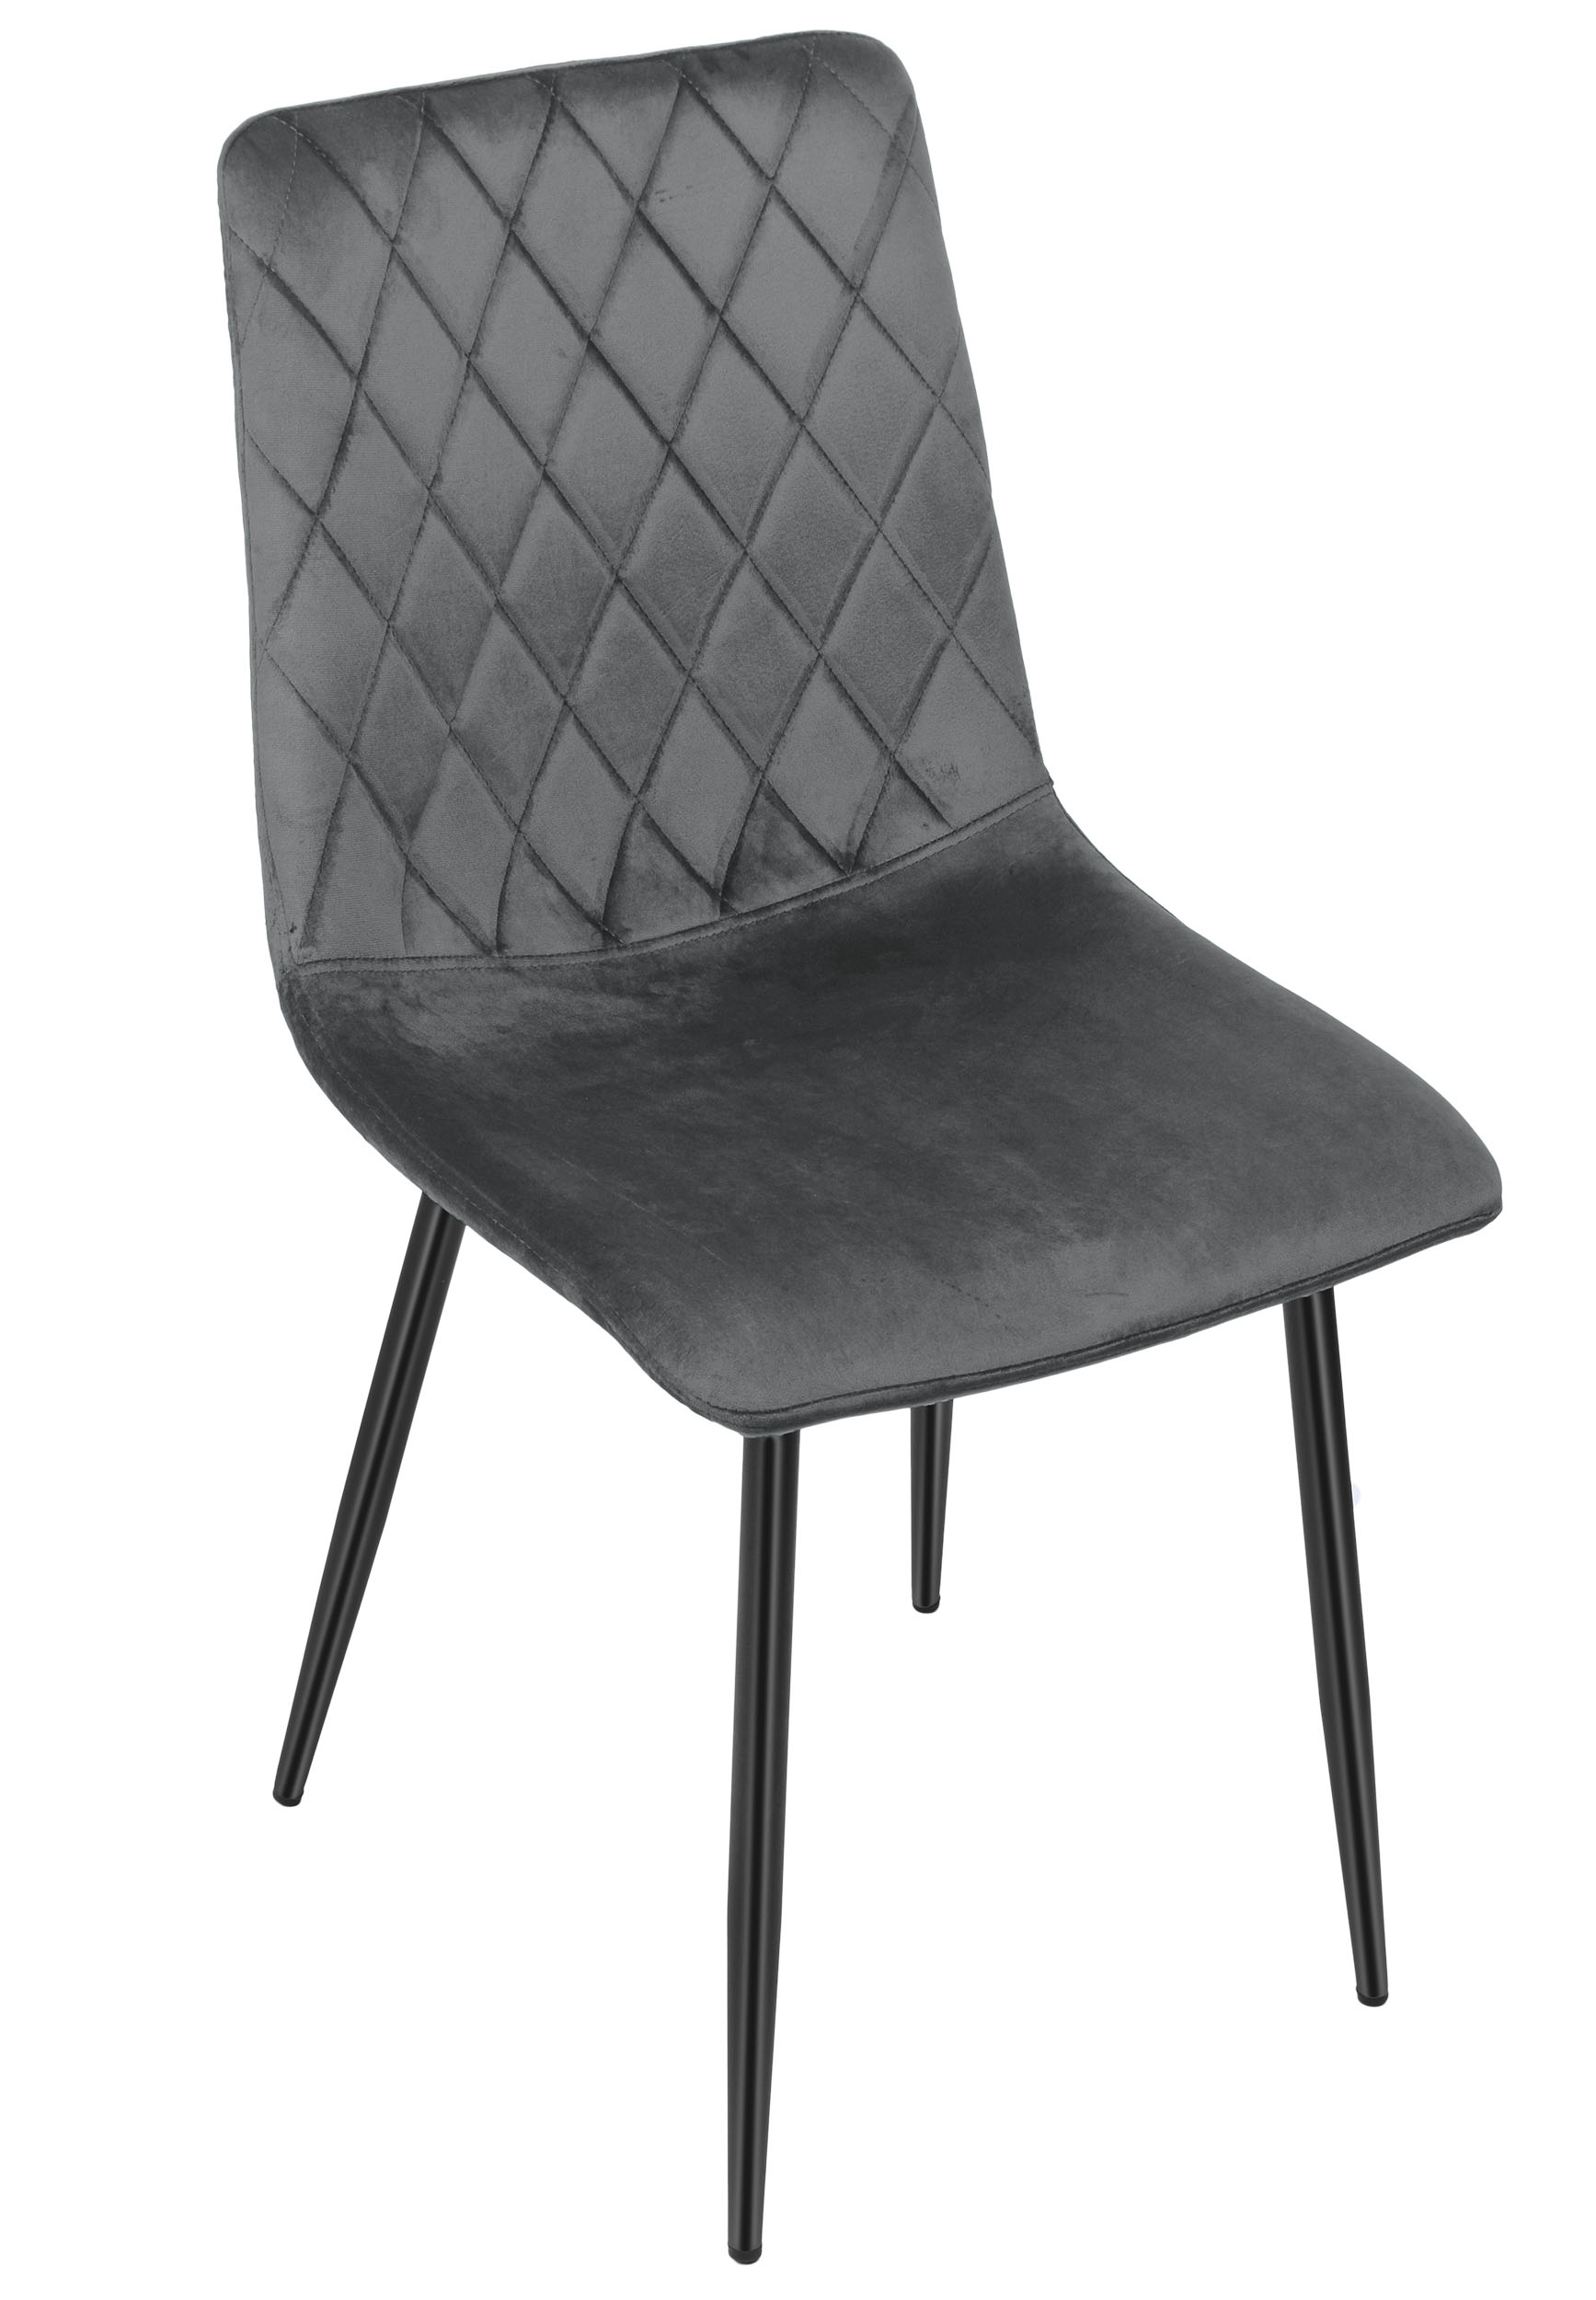 Krzesło aksamitne DEXTER grafitowe velvet